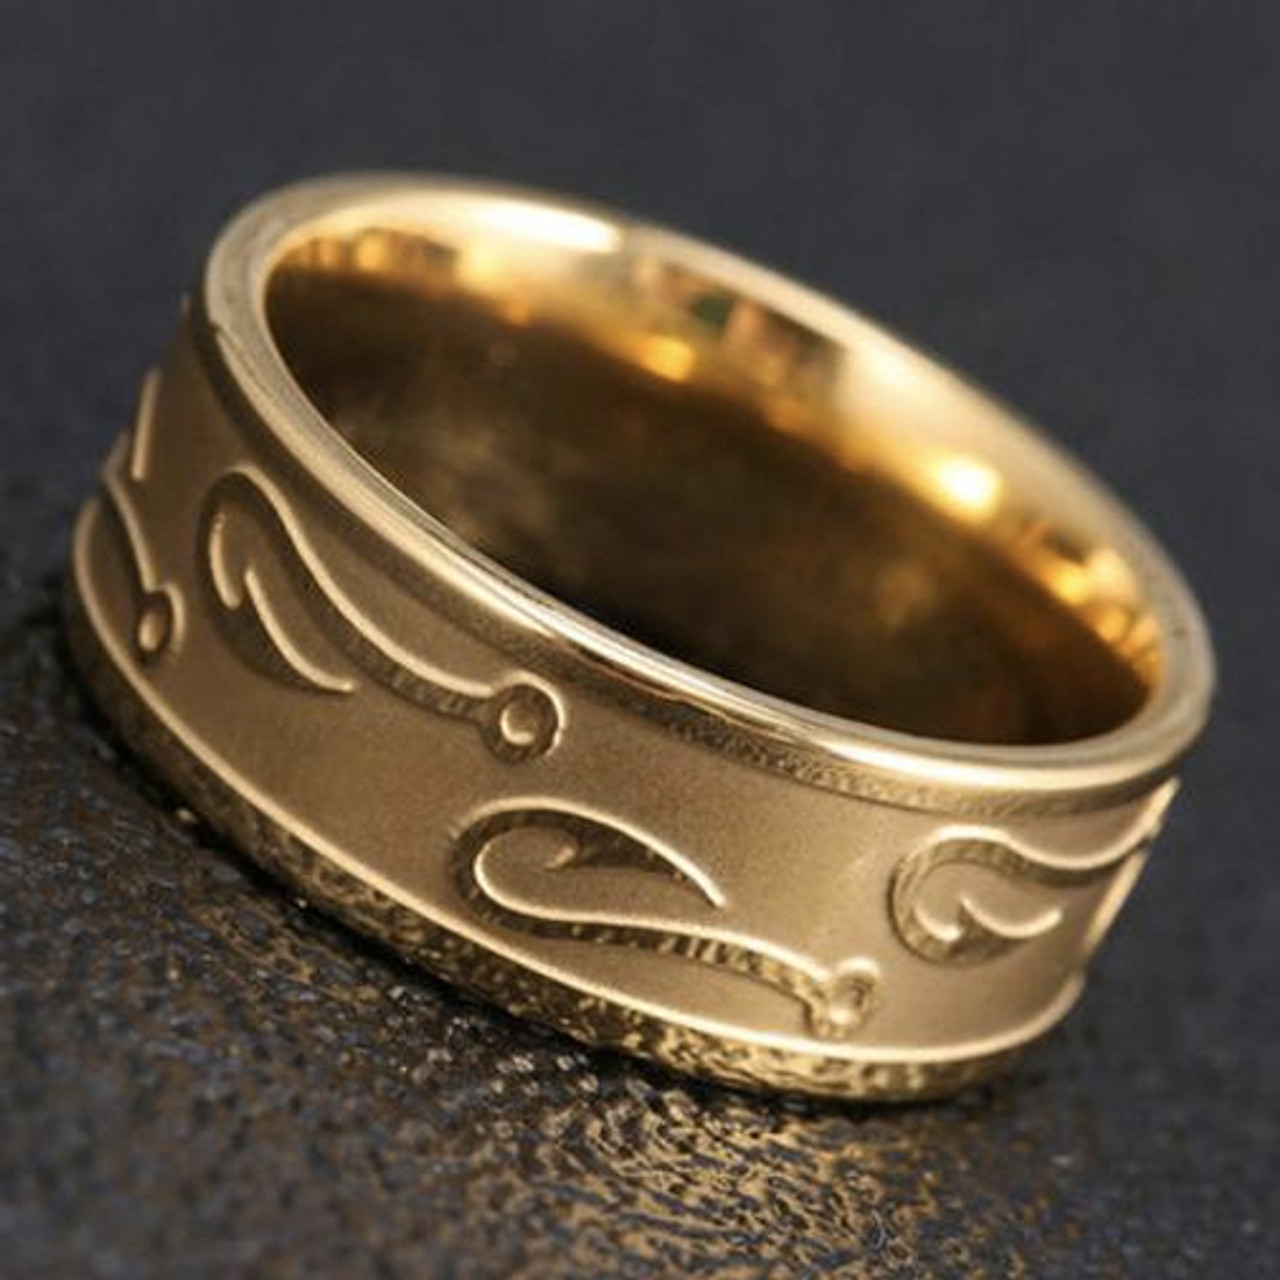 (8mm)  Unisex or Men's Fishing Ring / Fisherman's Wedding ring band. Gold Tone Titanium Band with Embossed Fish Hooks. Wedding ring band Comfort Fit Ring